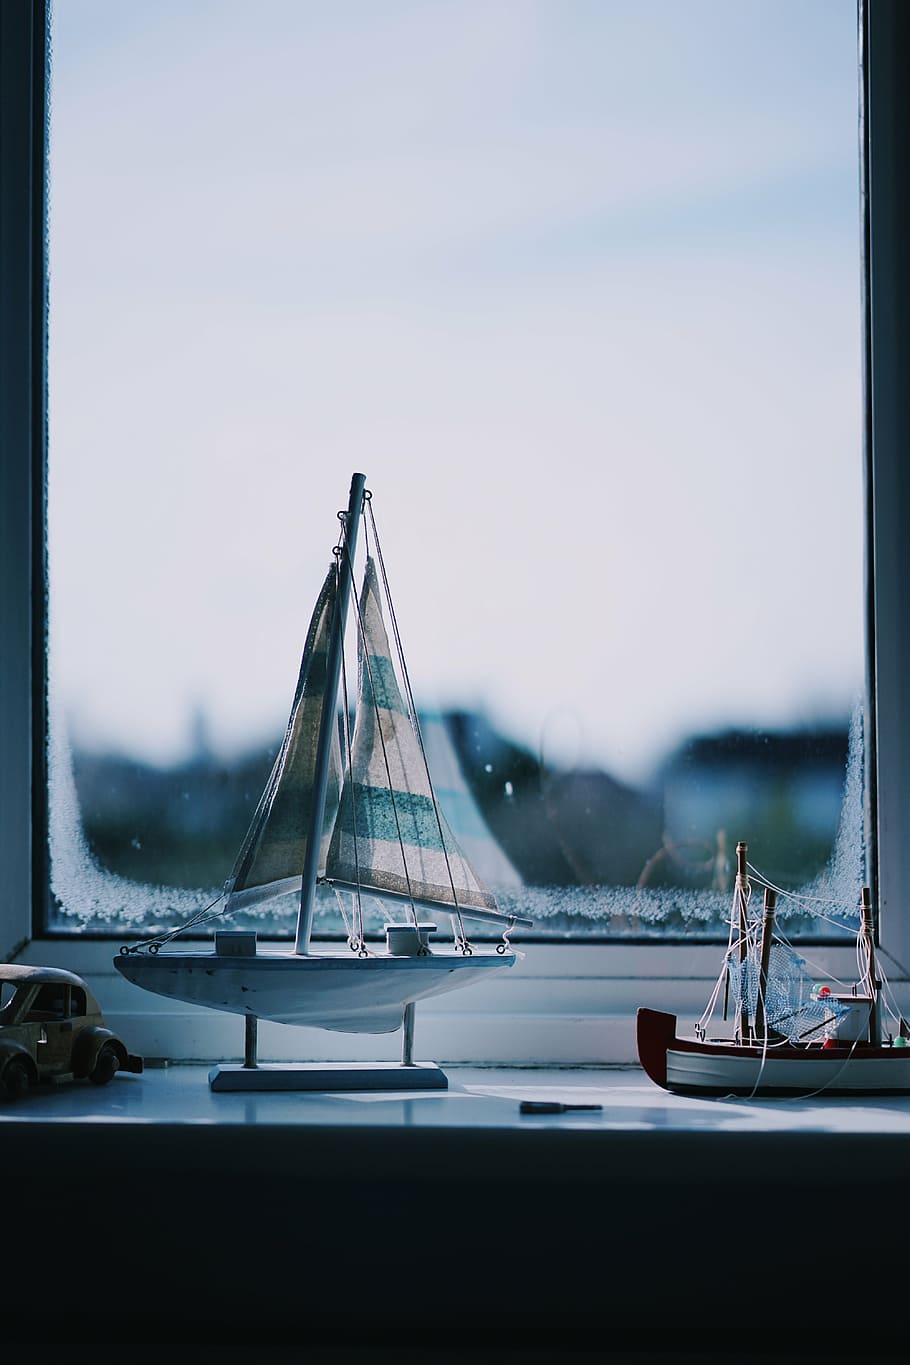 miniature, sailboat model, window, two, white, sail, ships, miniatures, glass, still